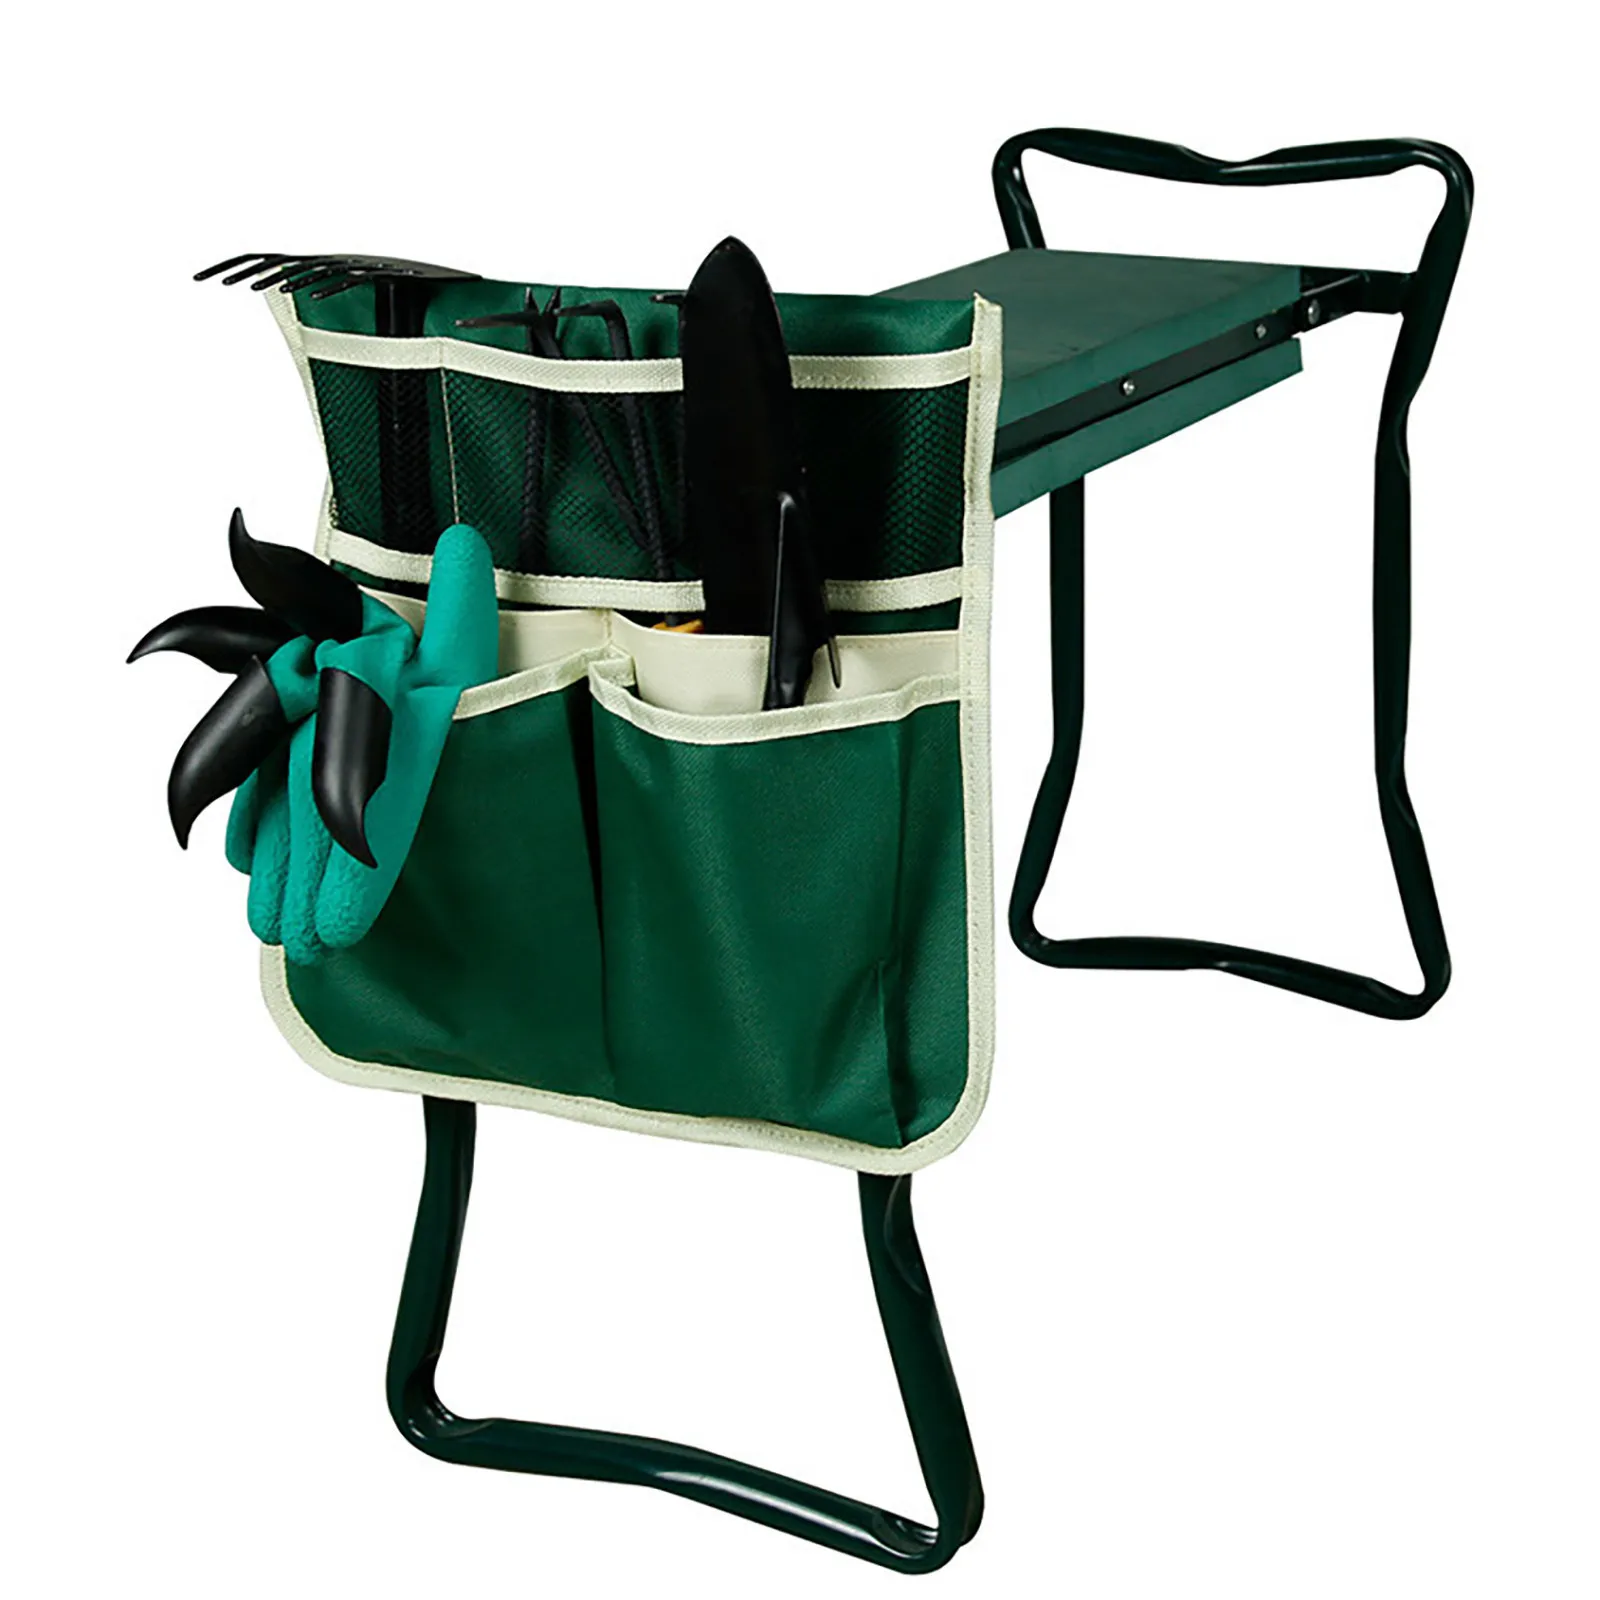 tool backpack Garden Trolley Side Hanging Bag With Mesh Bag Trim Tool Storage Bag Outdoor Portable Hand Tools Bag tool backpack